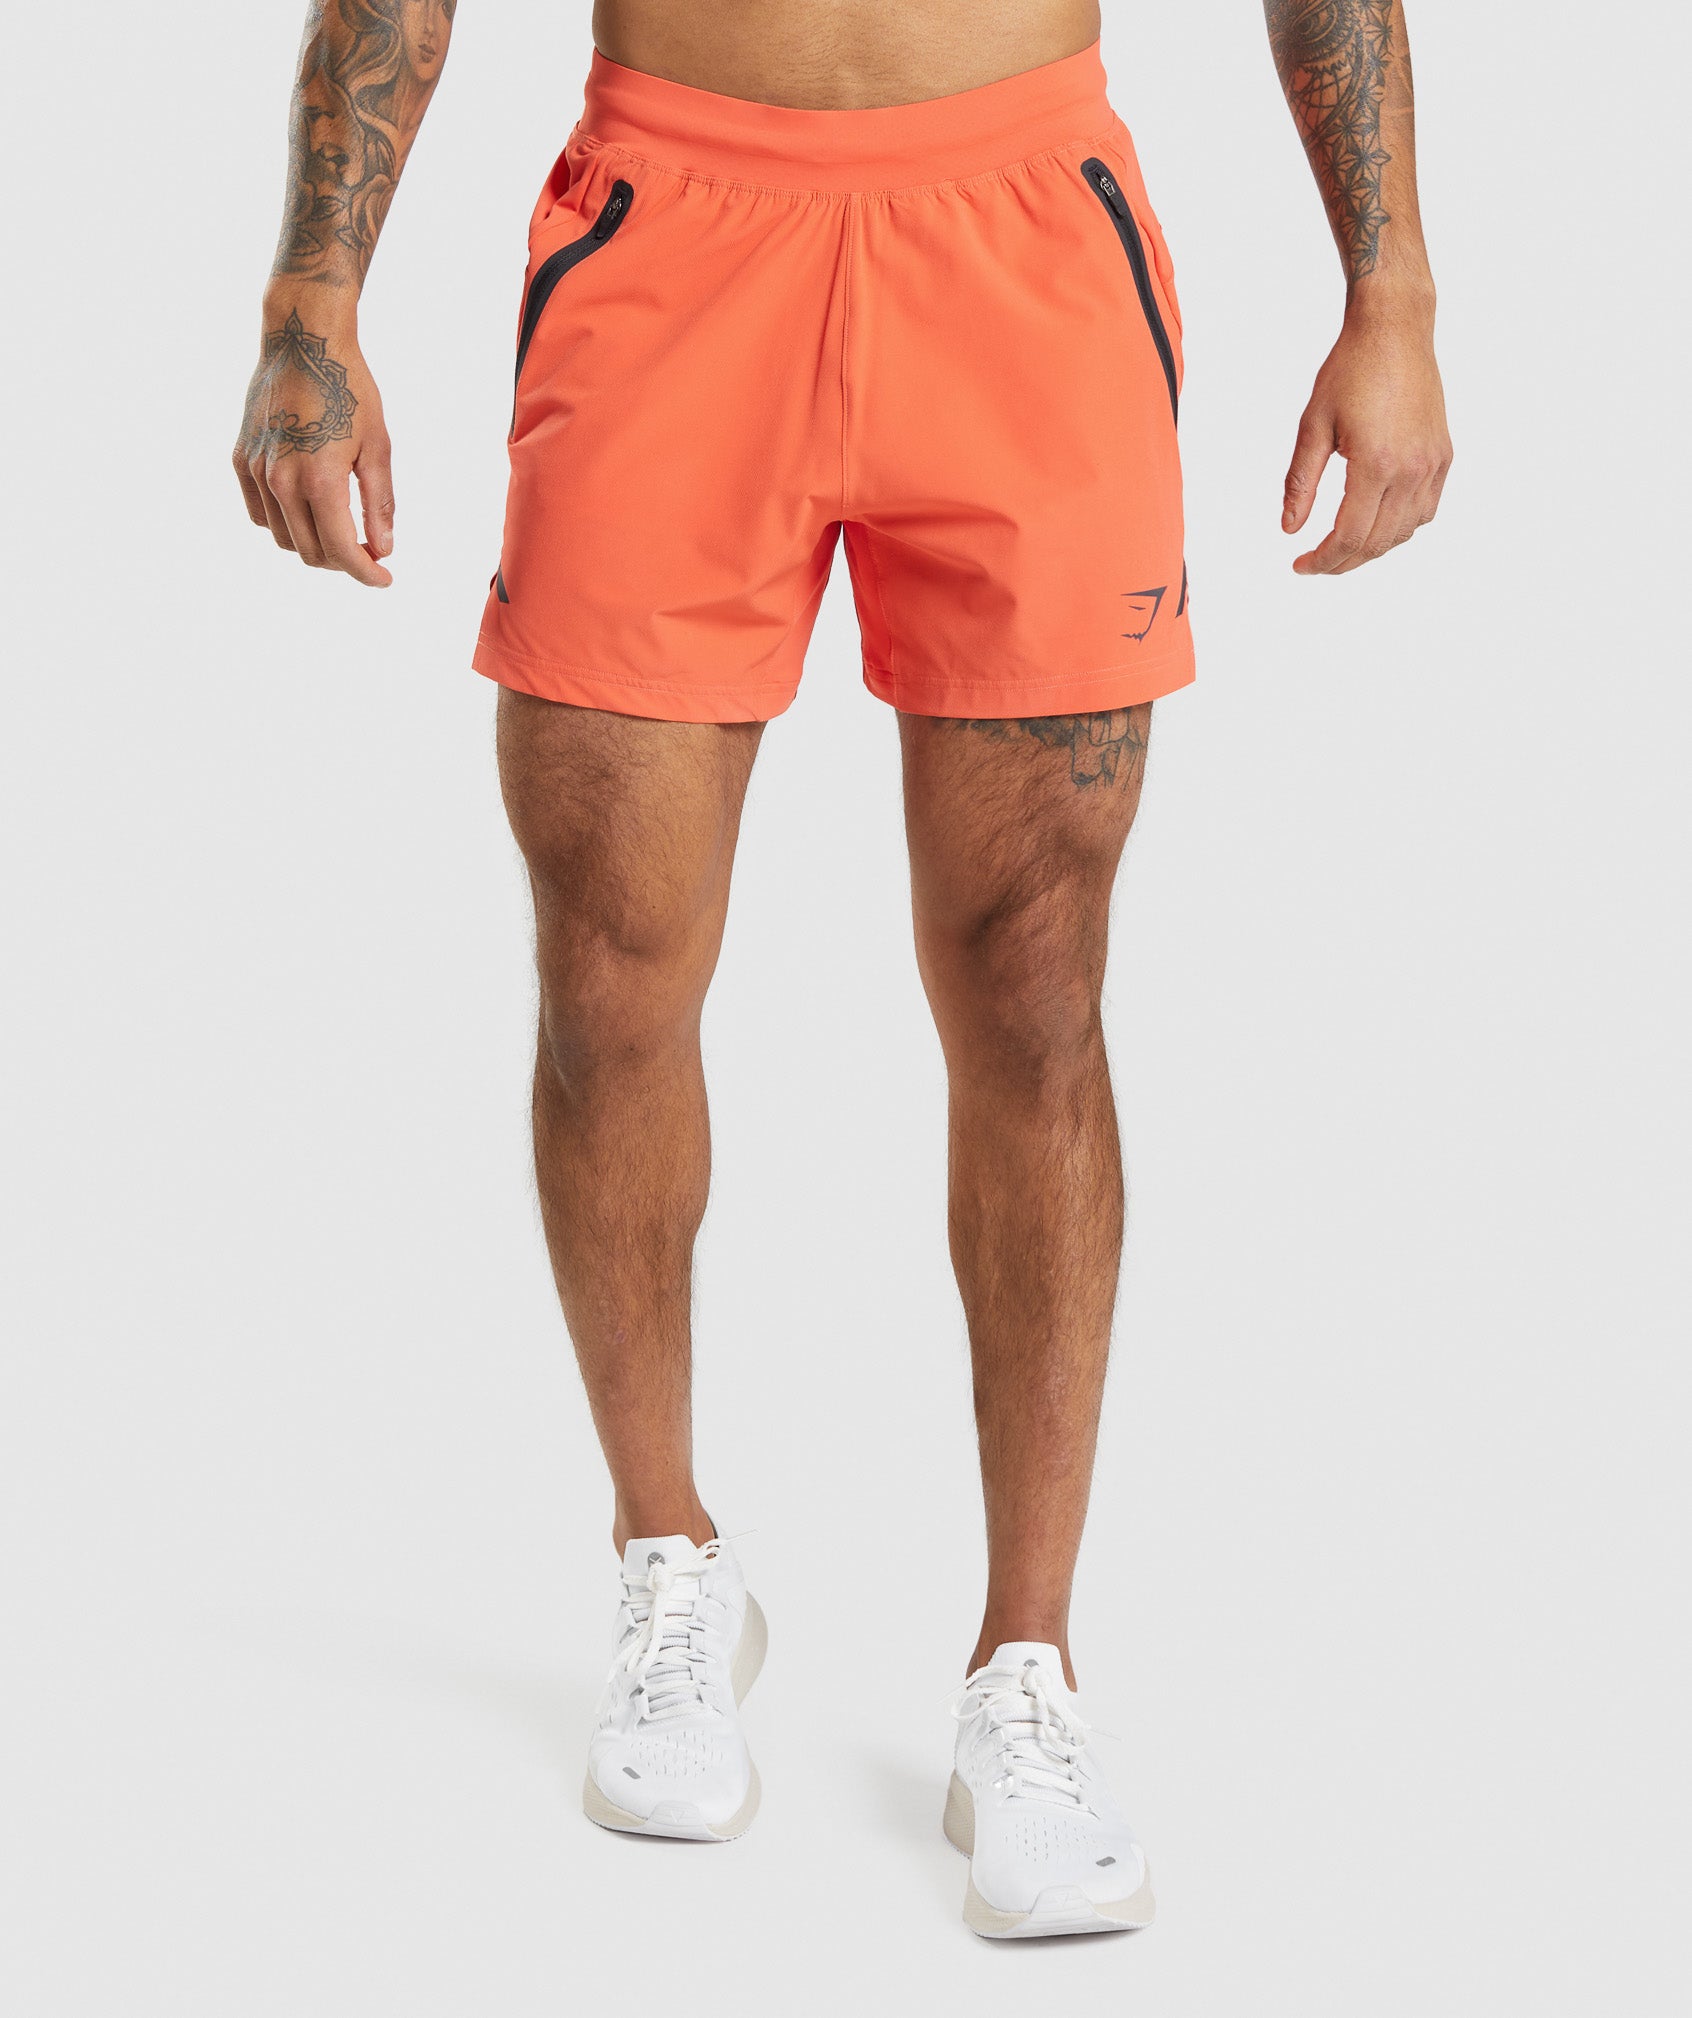 Gymshark Men XXL Athletic Orange Shorts Unlined 7” Inseam Basketball Gym G